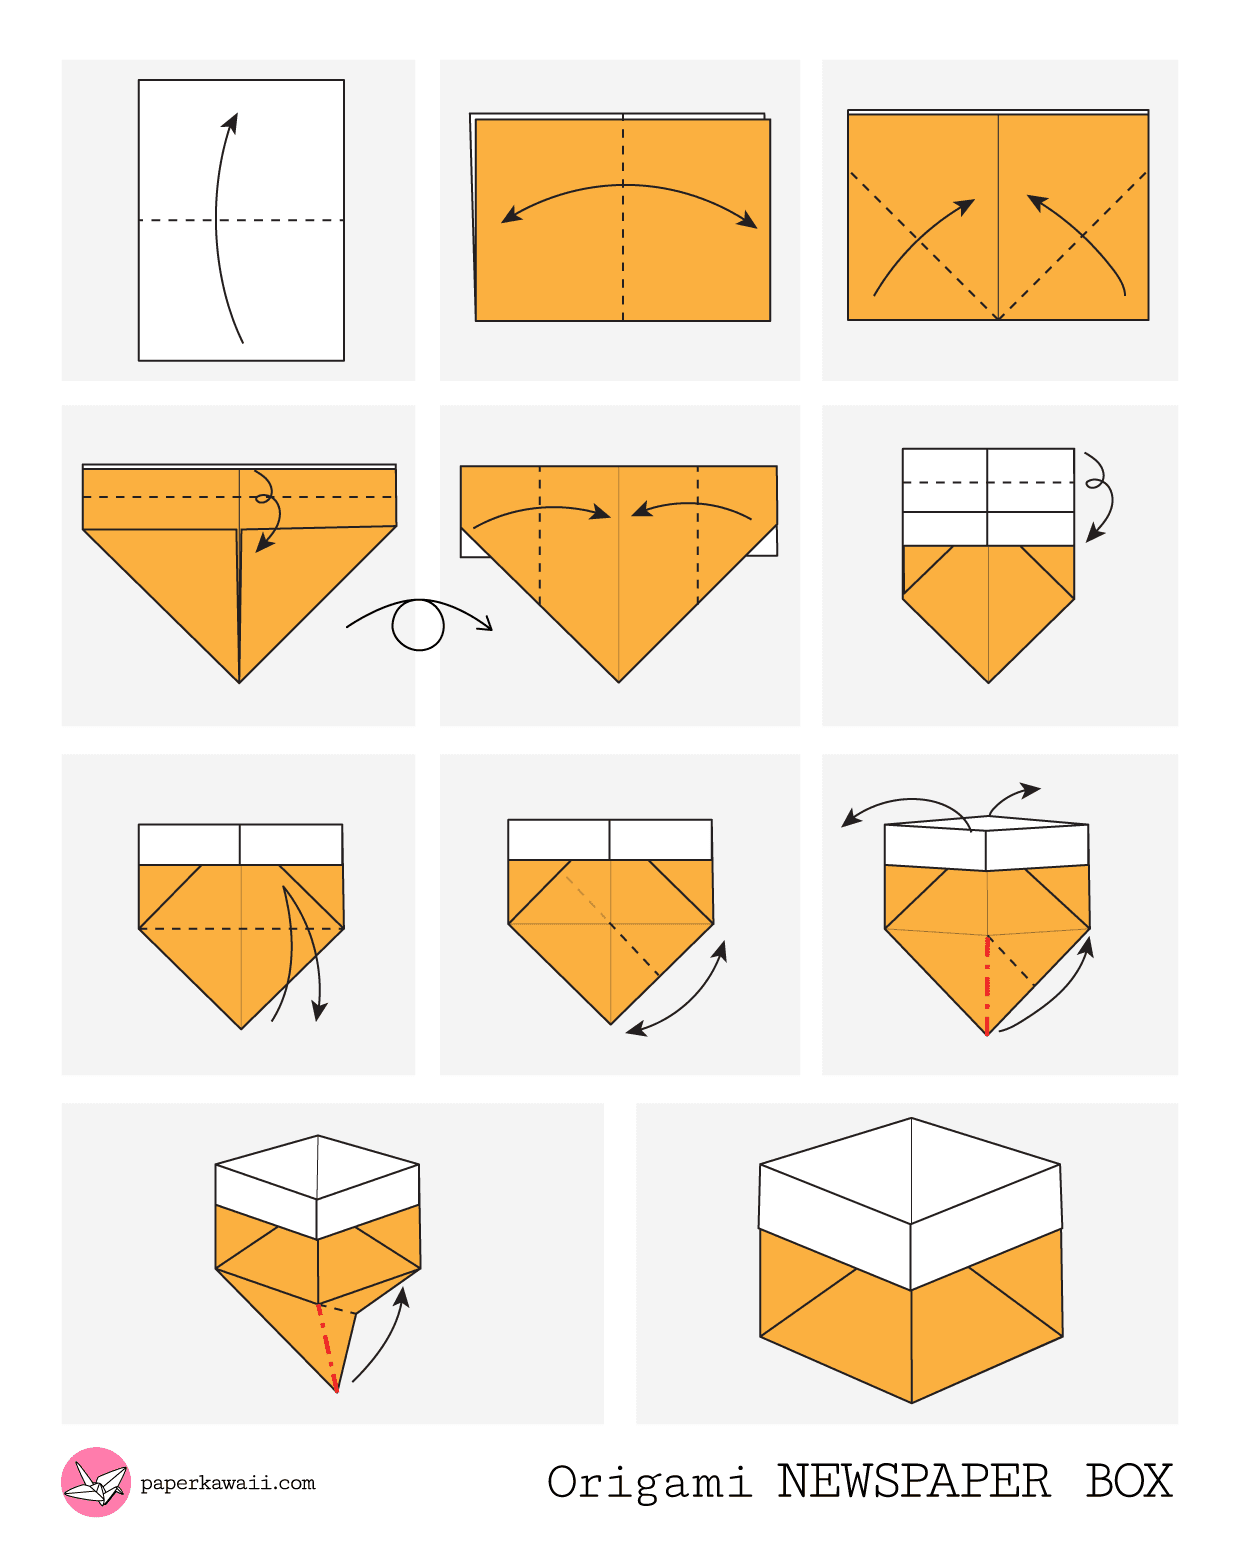 Origami Newspaper Box Diagram